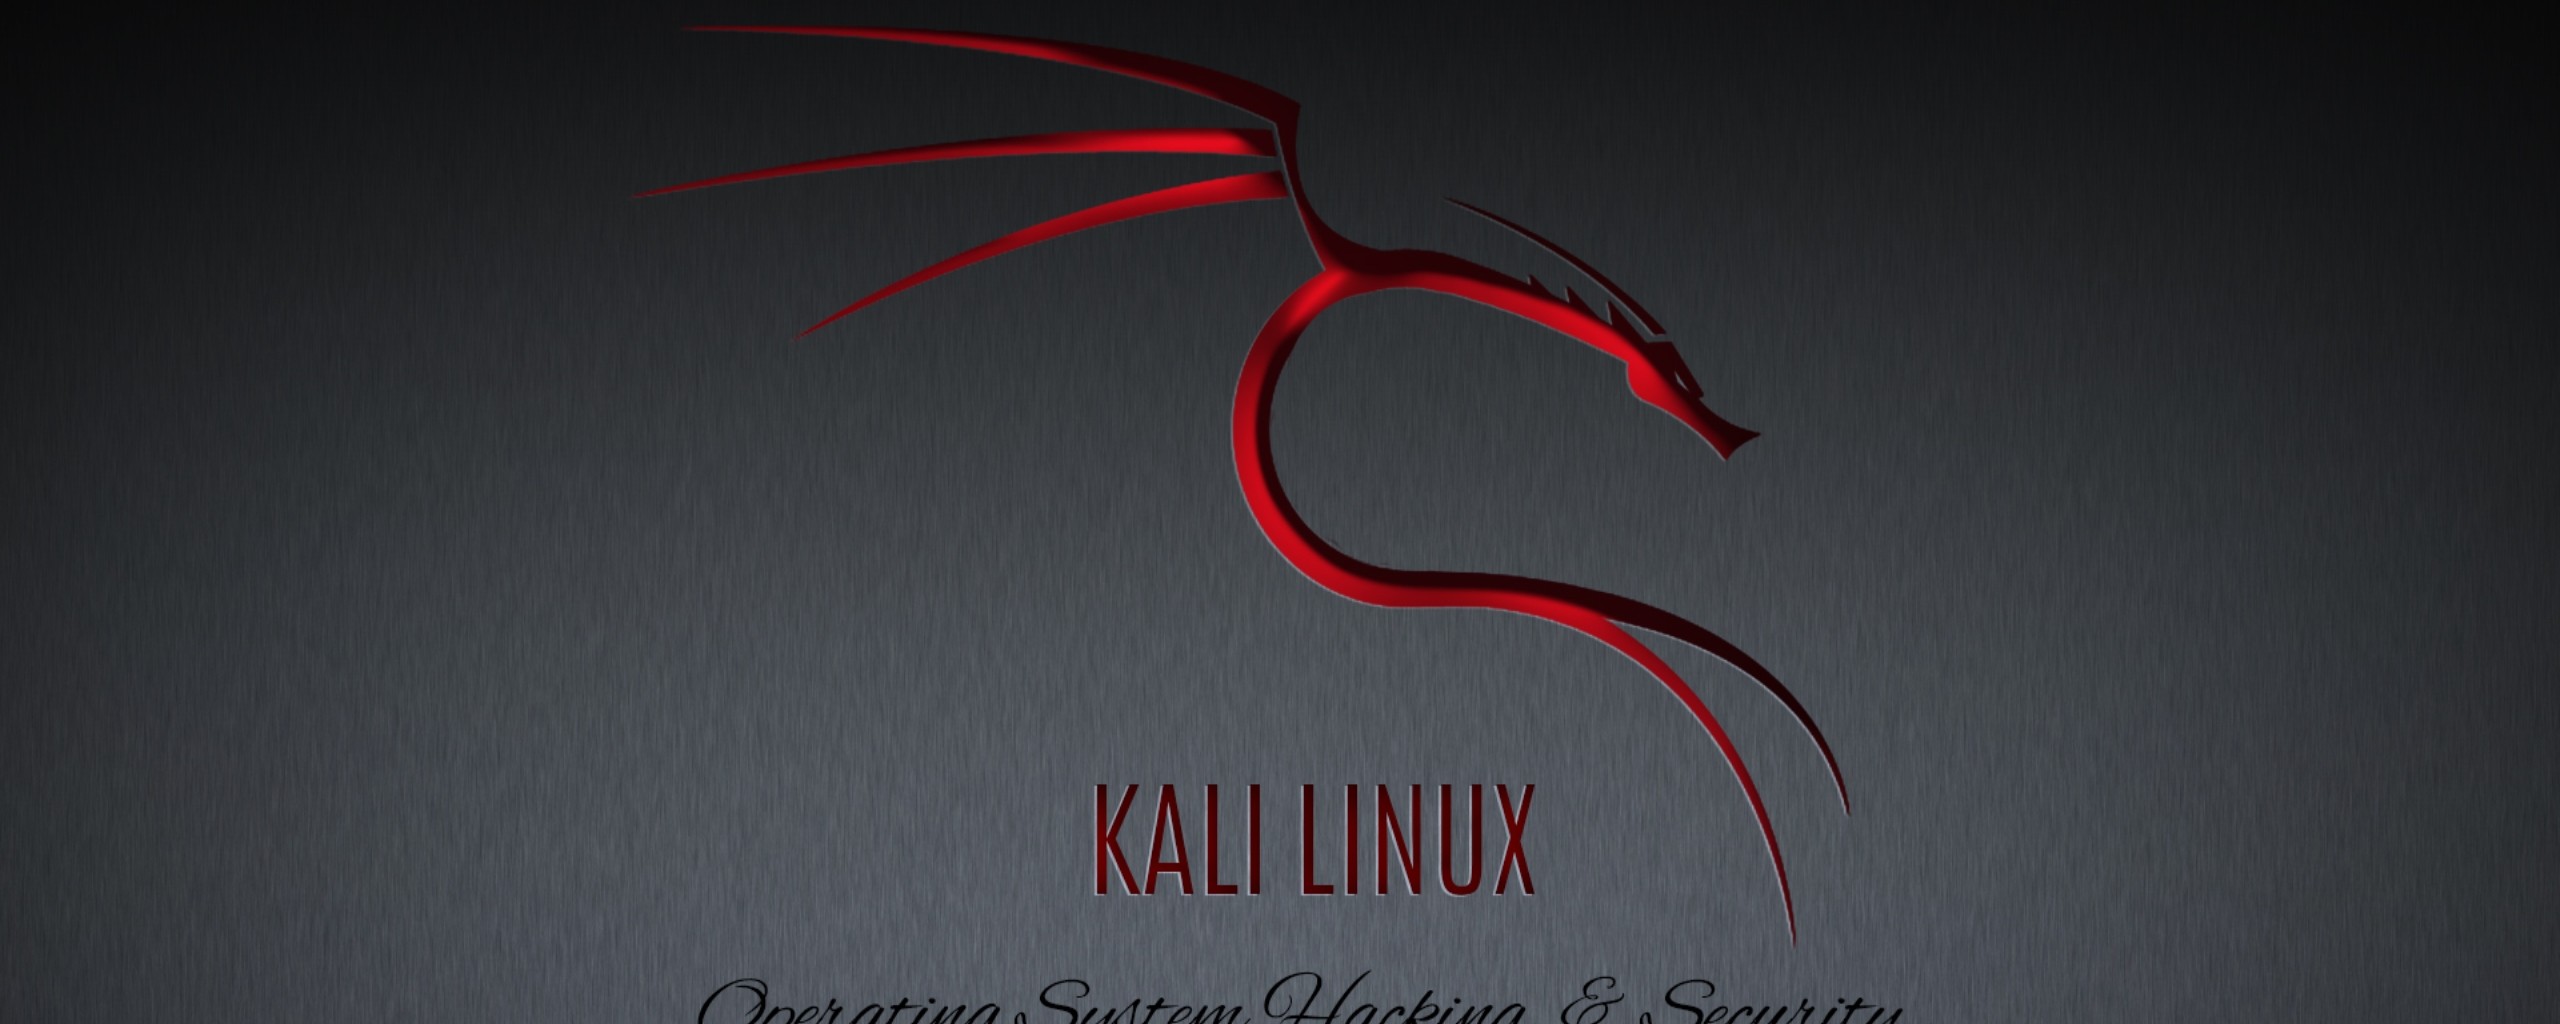 43 Kali Linux Wallpaper Hd On Wallpapersafari